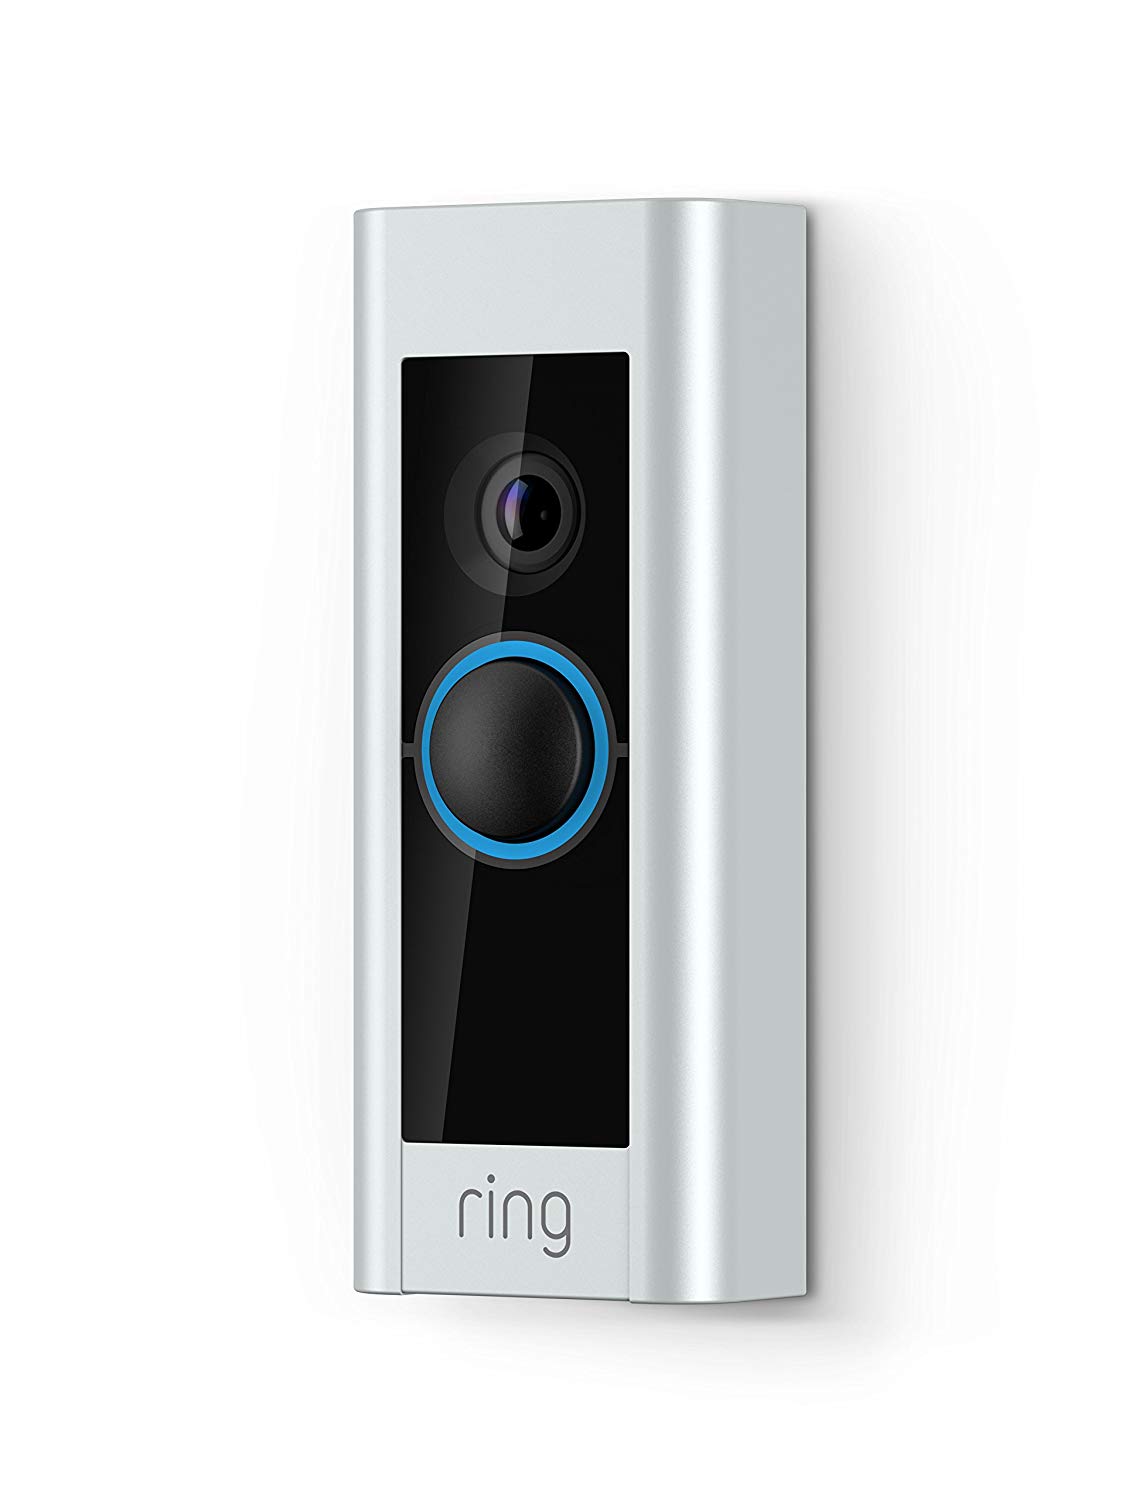 ring doorbell Amazon Prime Days 